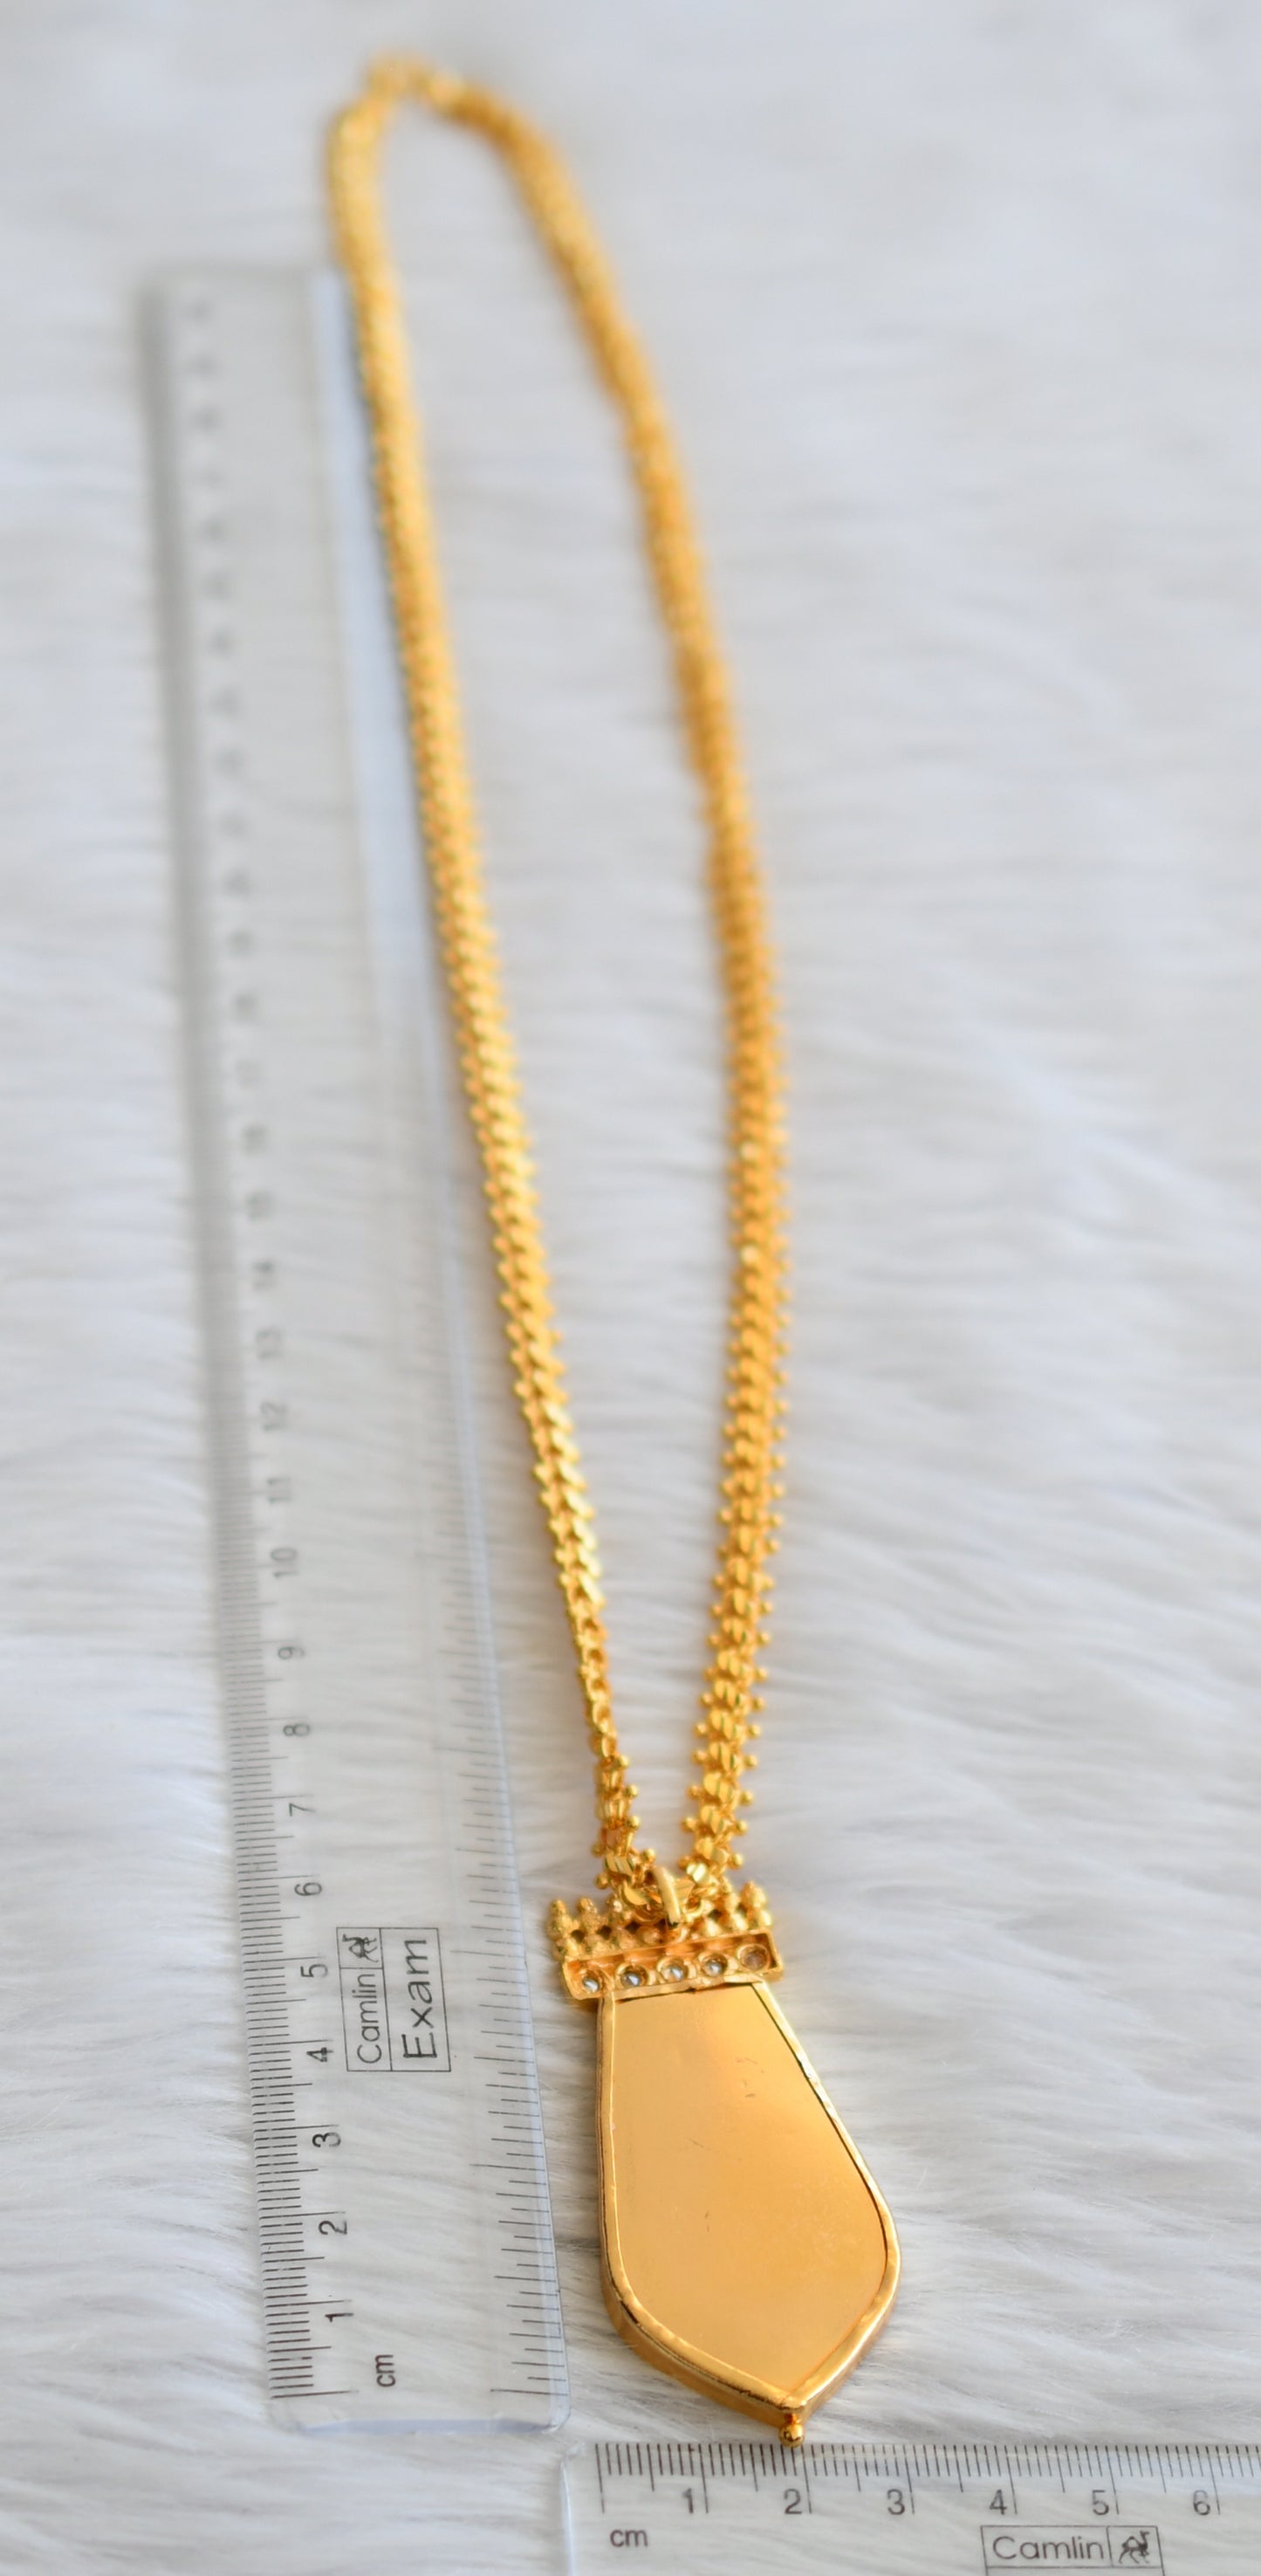 Gold tone kerala style 24 inches chian with red-white nagapadam pendant dj-45957